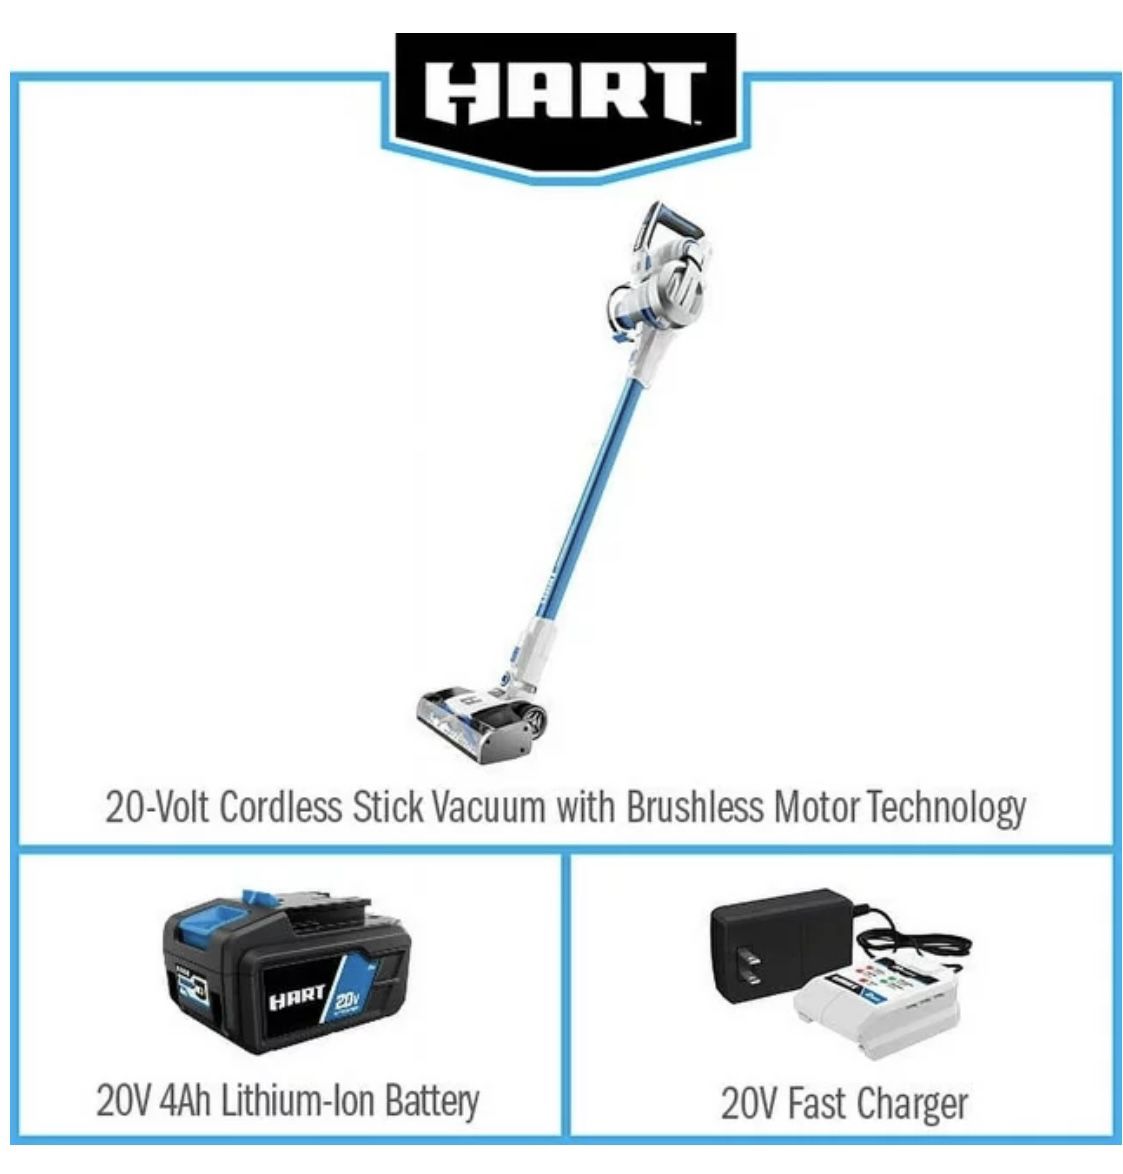 HART 20-Volt Cordless Stick Vacuum NEW IN BOX